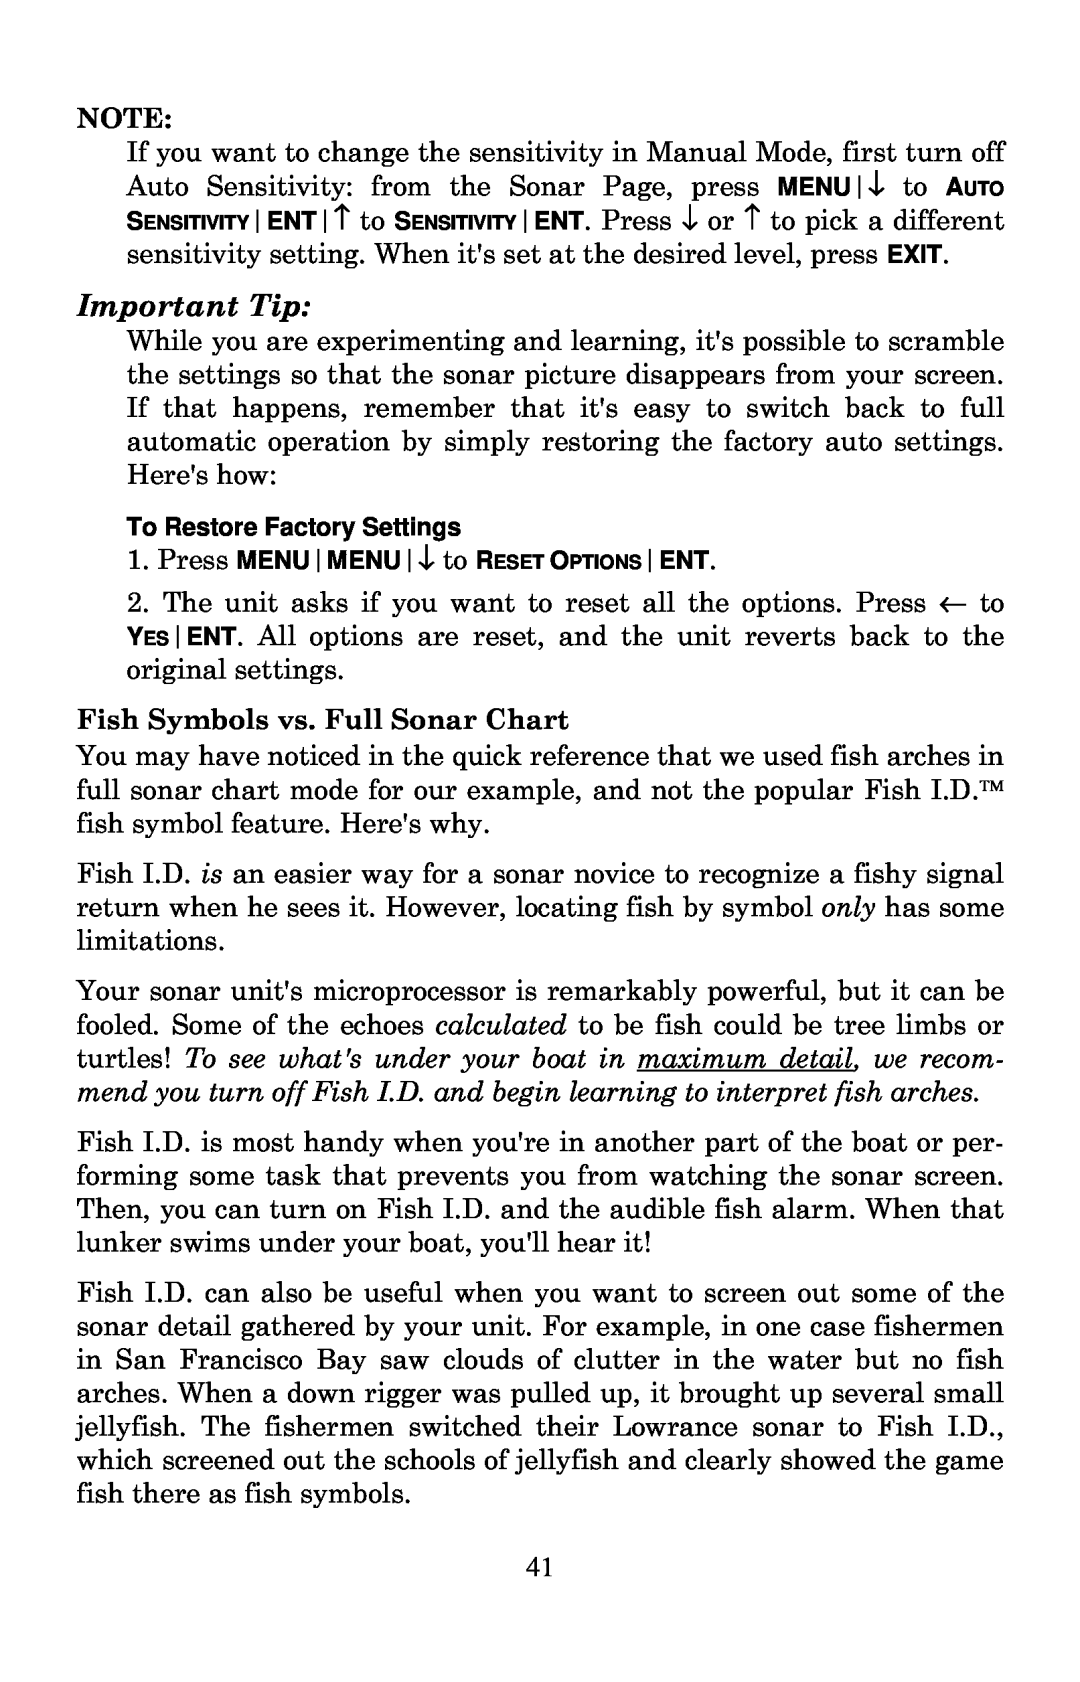 Lowrance electronic X136DF, X135, X125, X126DF manual Important Tip, Fish Symbols vs. Full Sonar Chart 